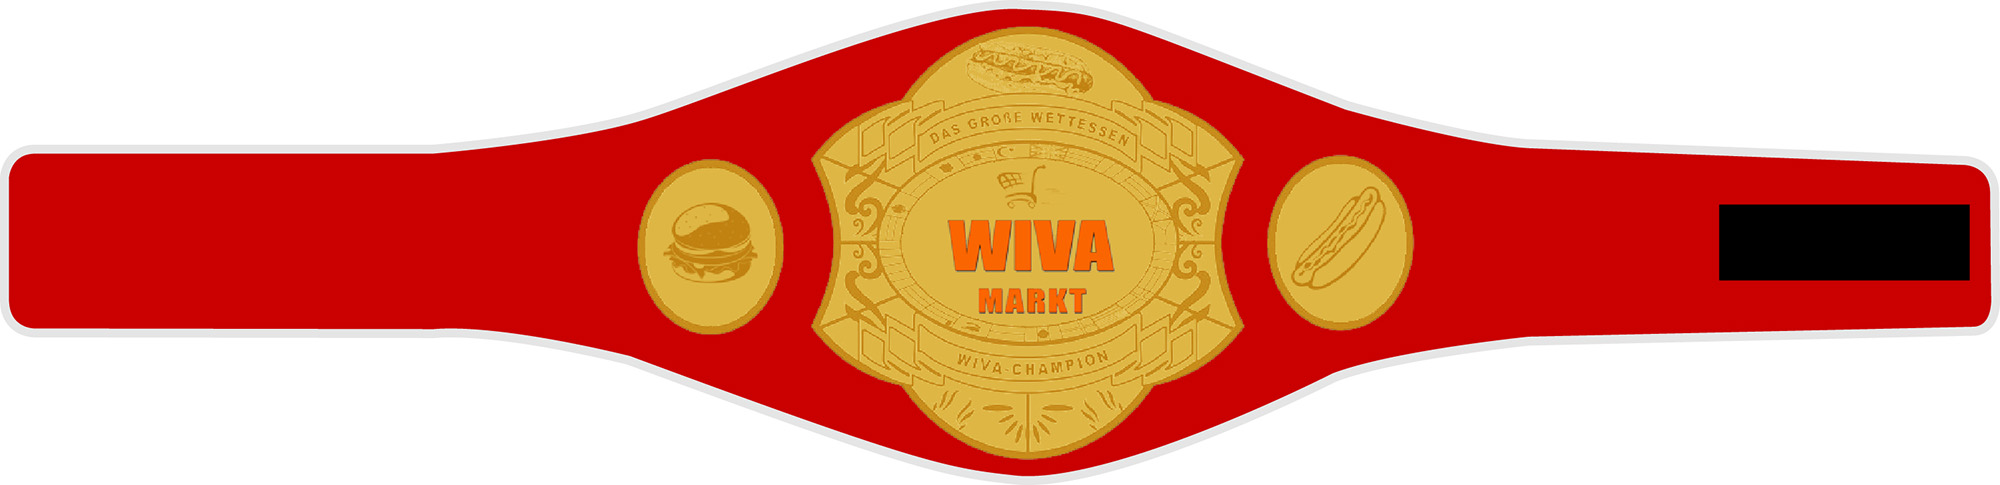 WIVA Markt Wettessen Eat Competition Hotdog Burger Champion Gürtel